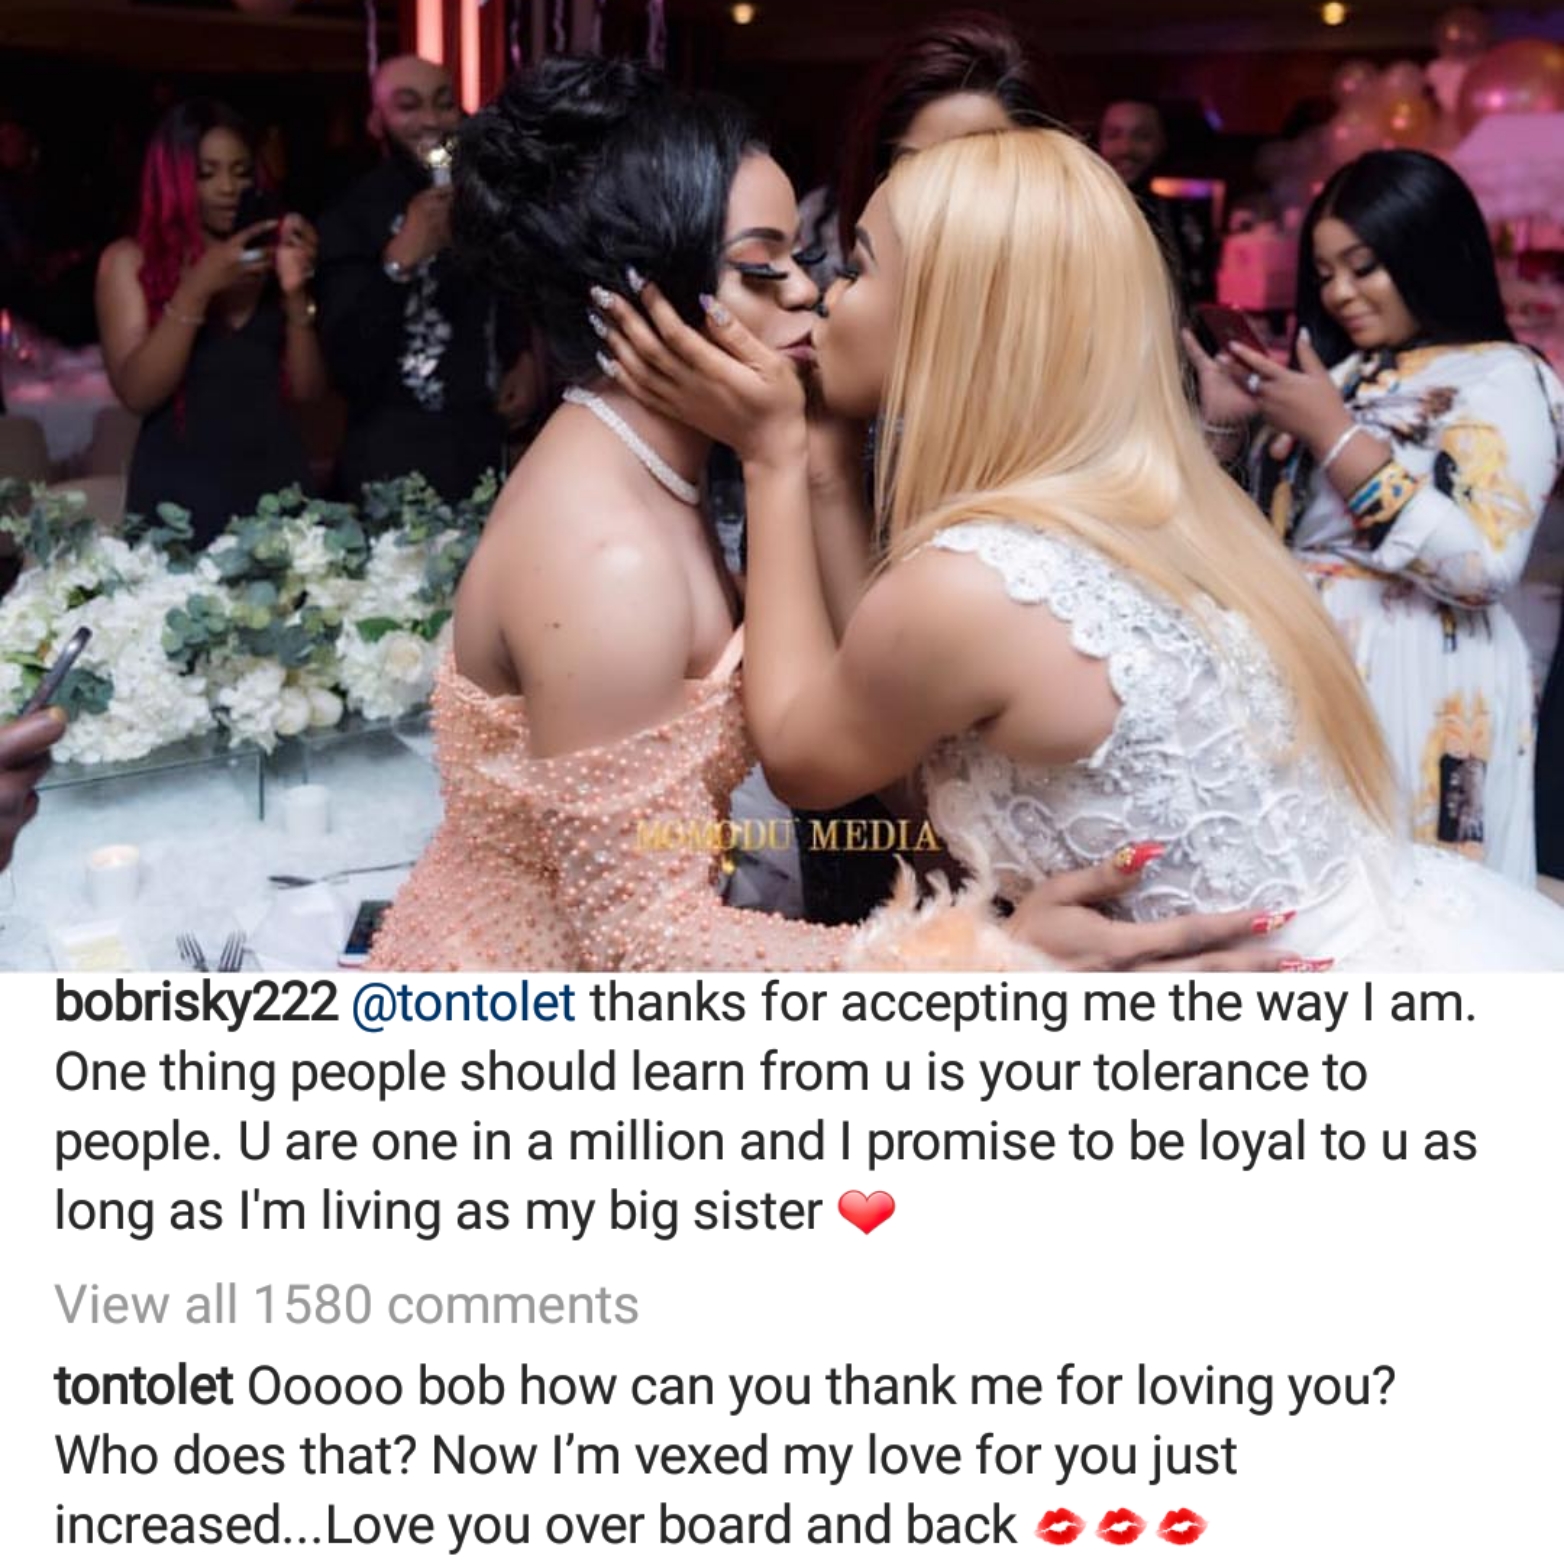 'Thanks for accepting me the way I am' - Bobrisky tells Tonto Dikeh, she responds